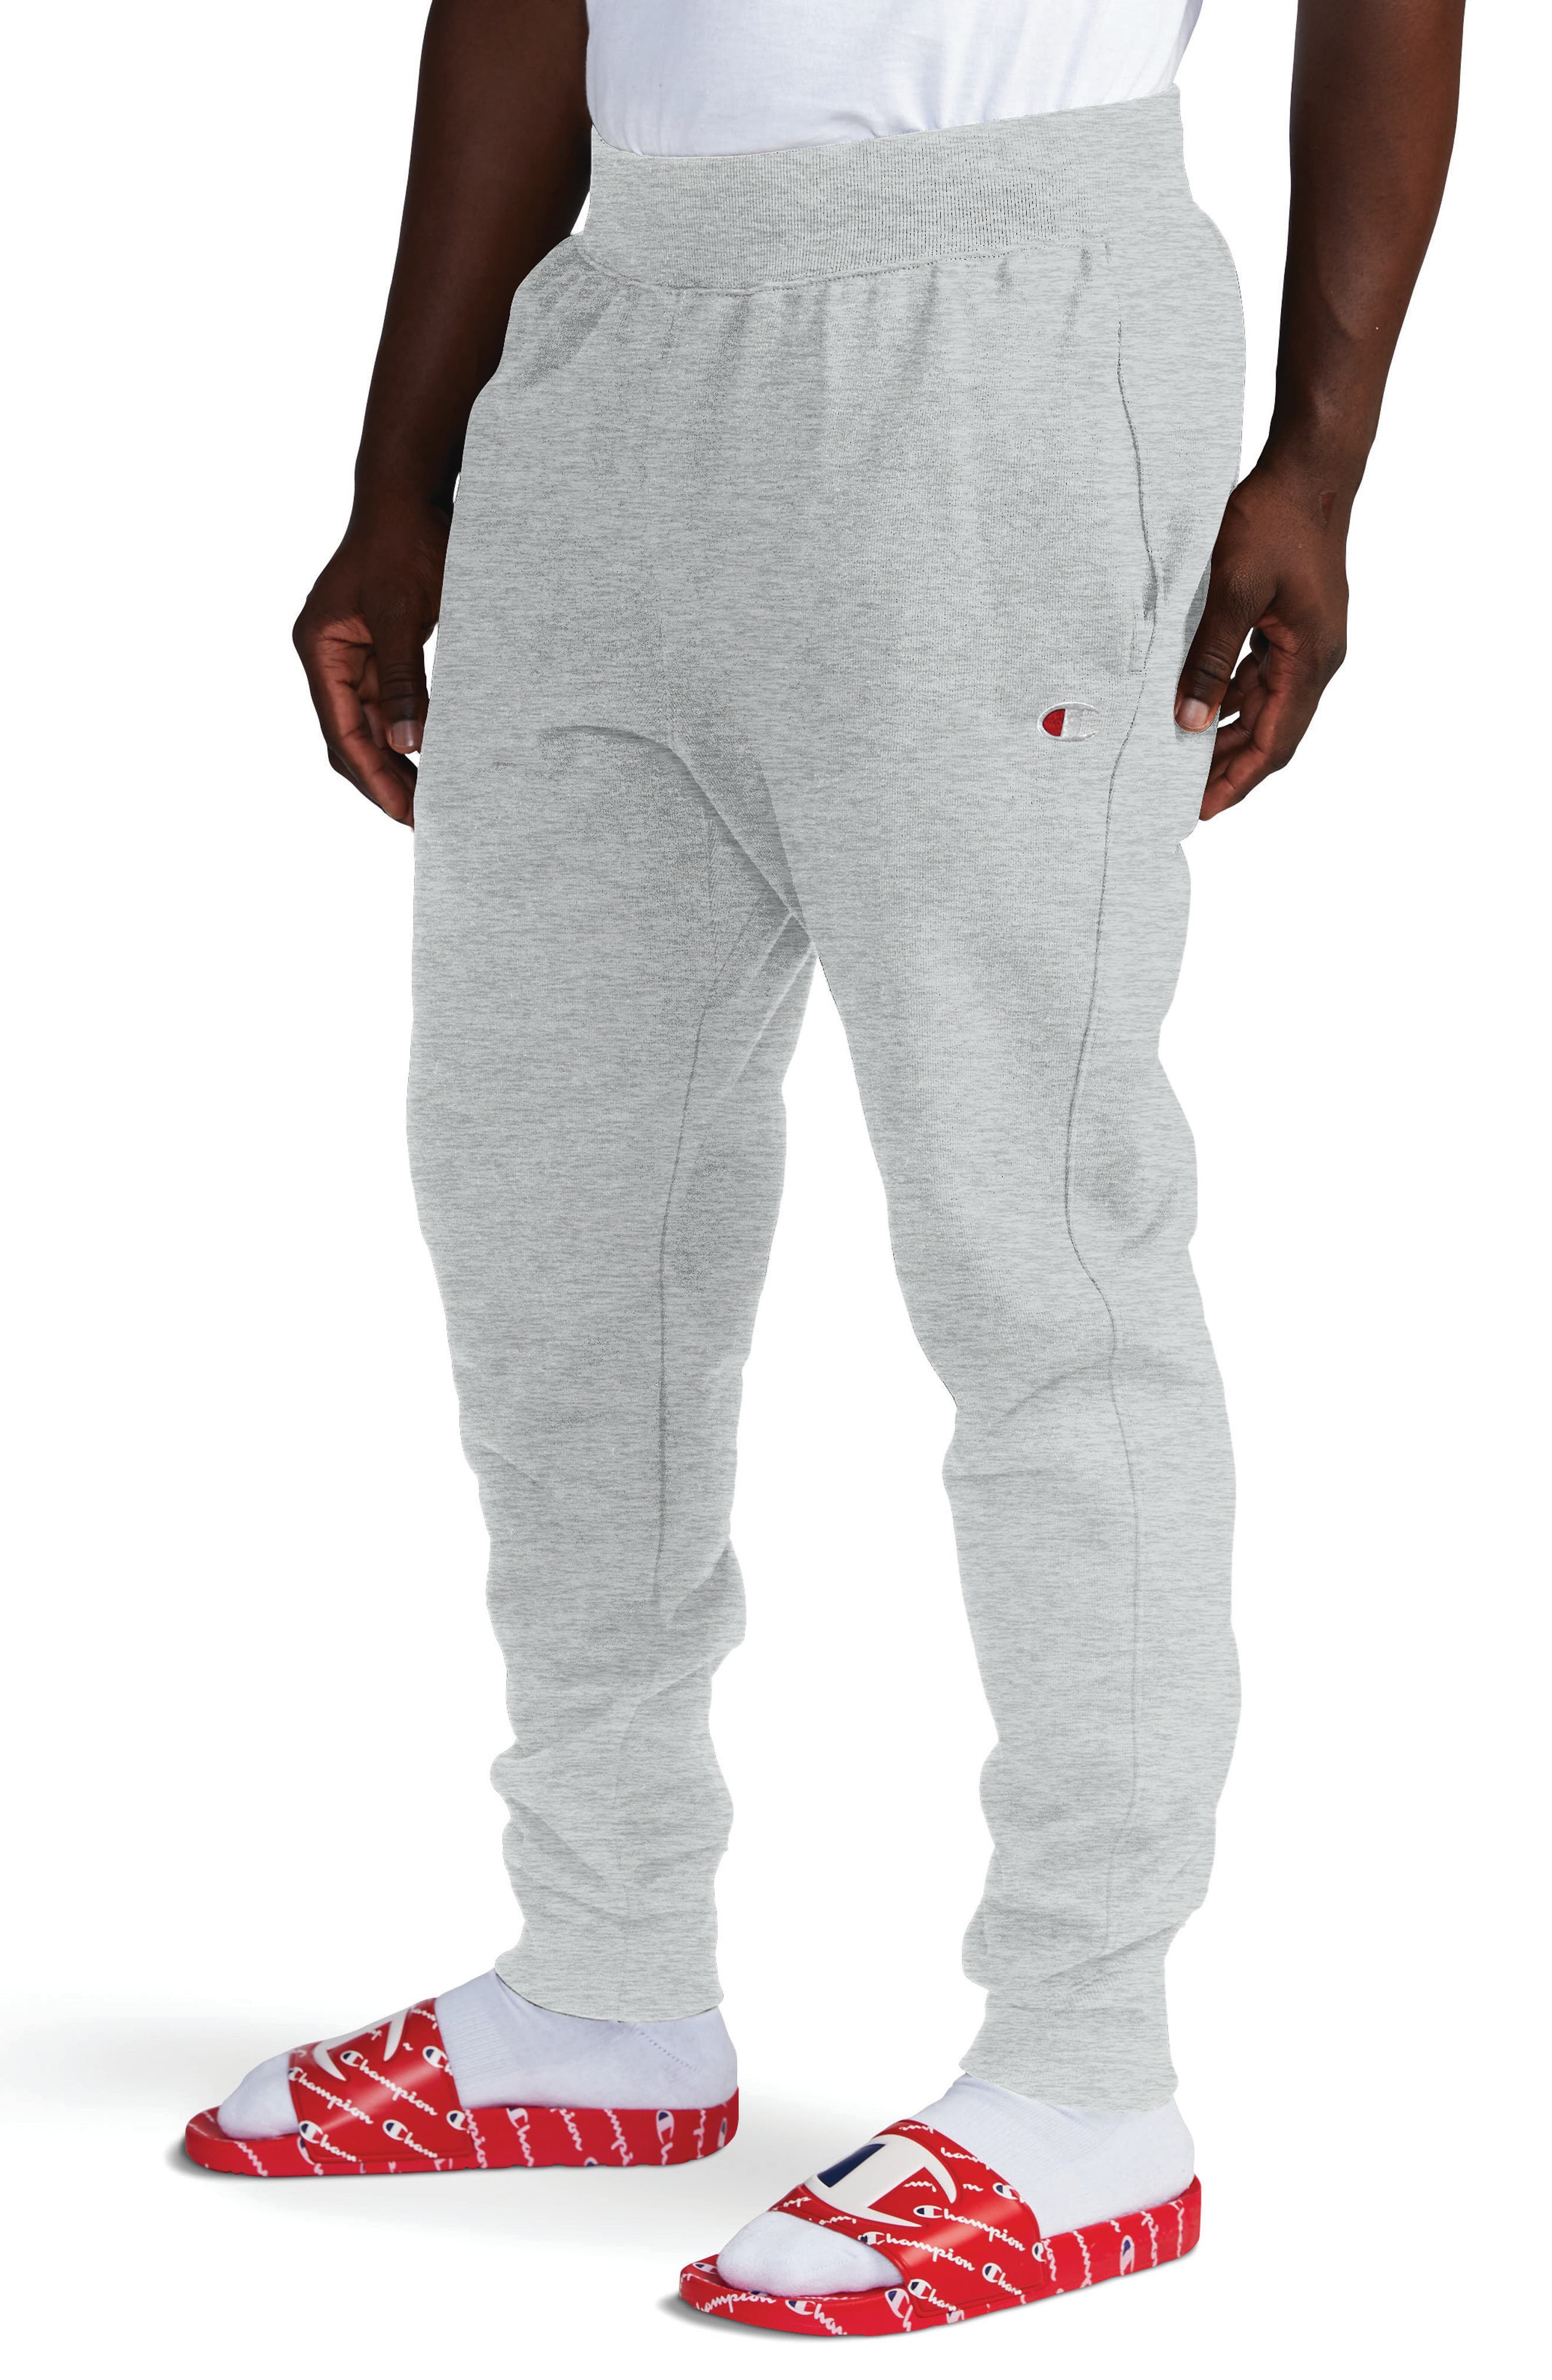 Jogging pants Grey Size M to L Juniors Champion Fleece Athletic Sweat Pants